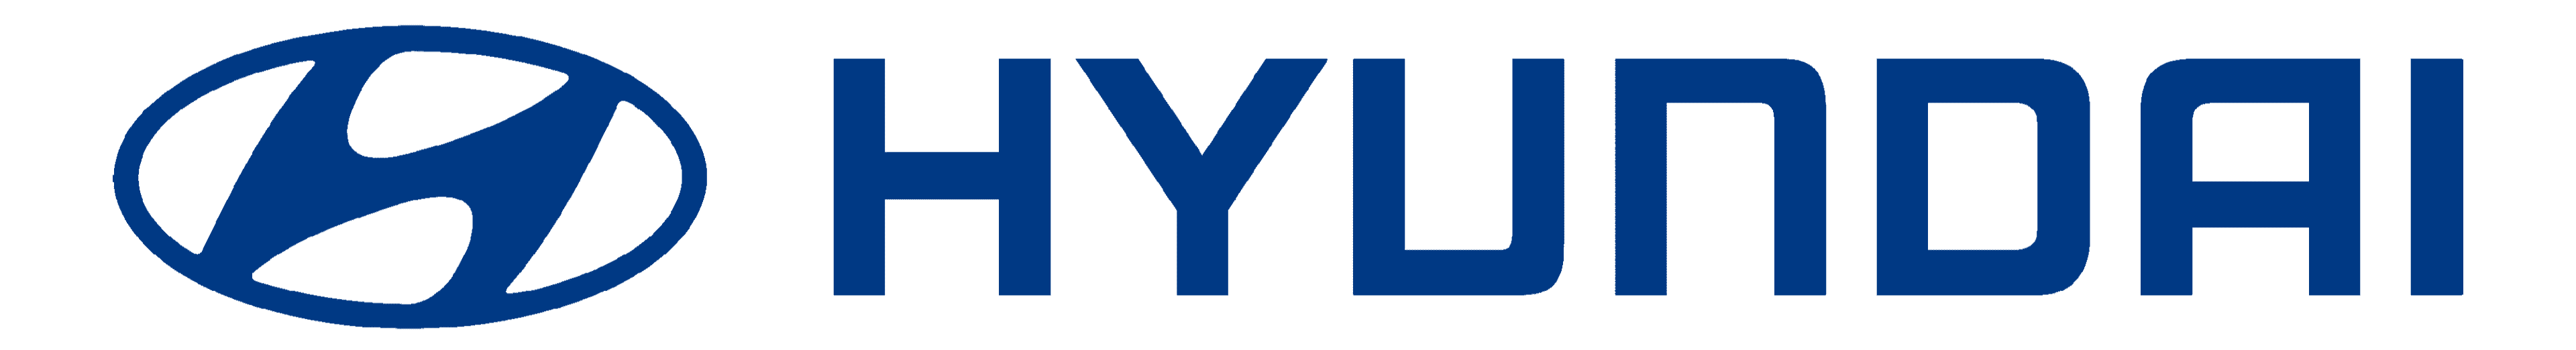 Hyundai-quang-binh-logo